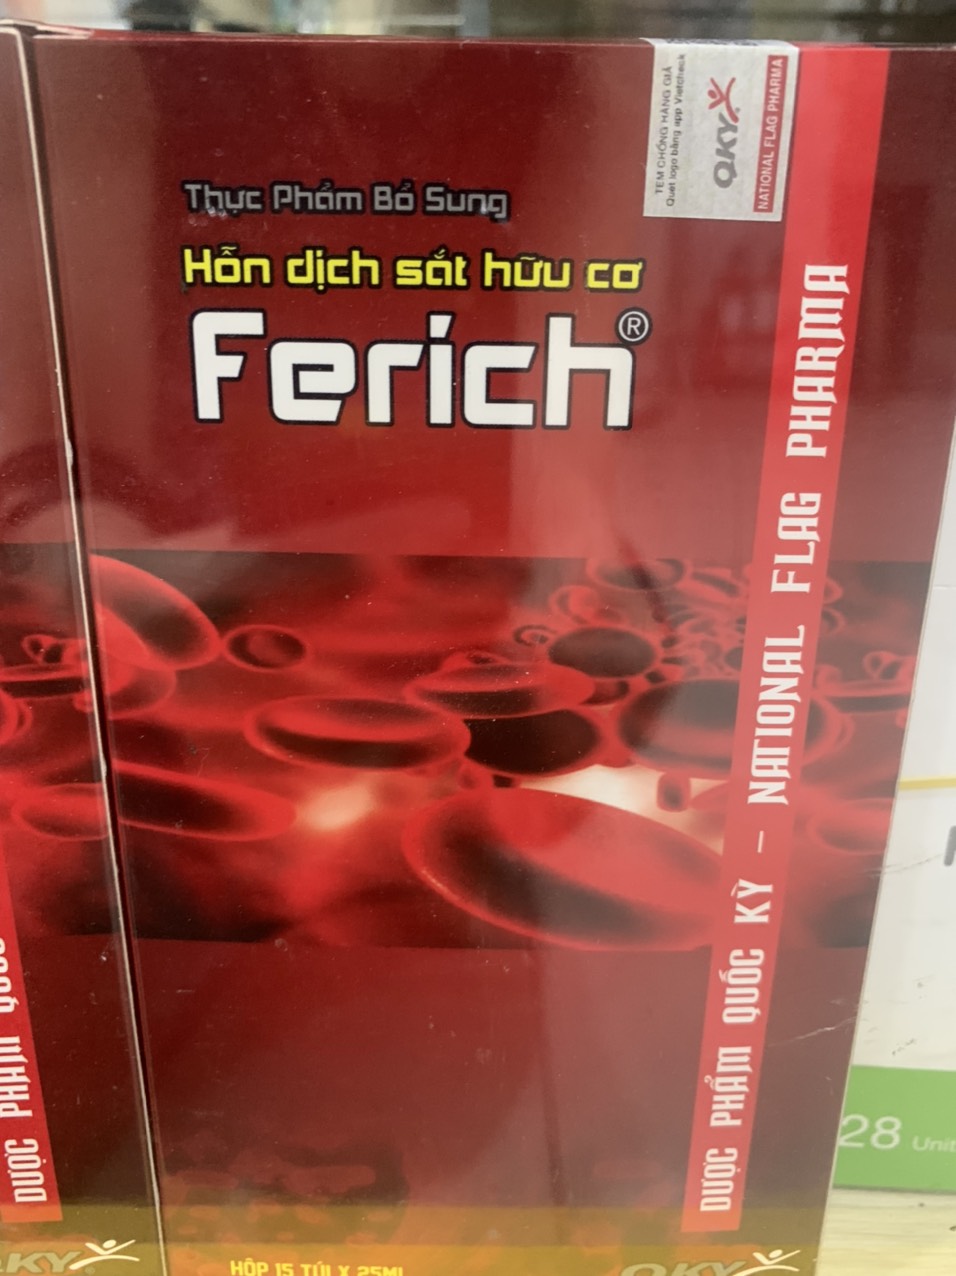 Hỗn dịch sắt hữu cơ Ferich